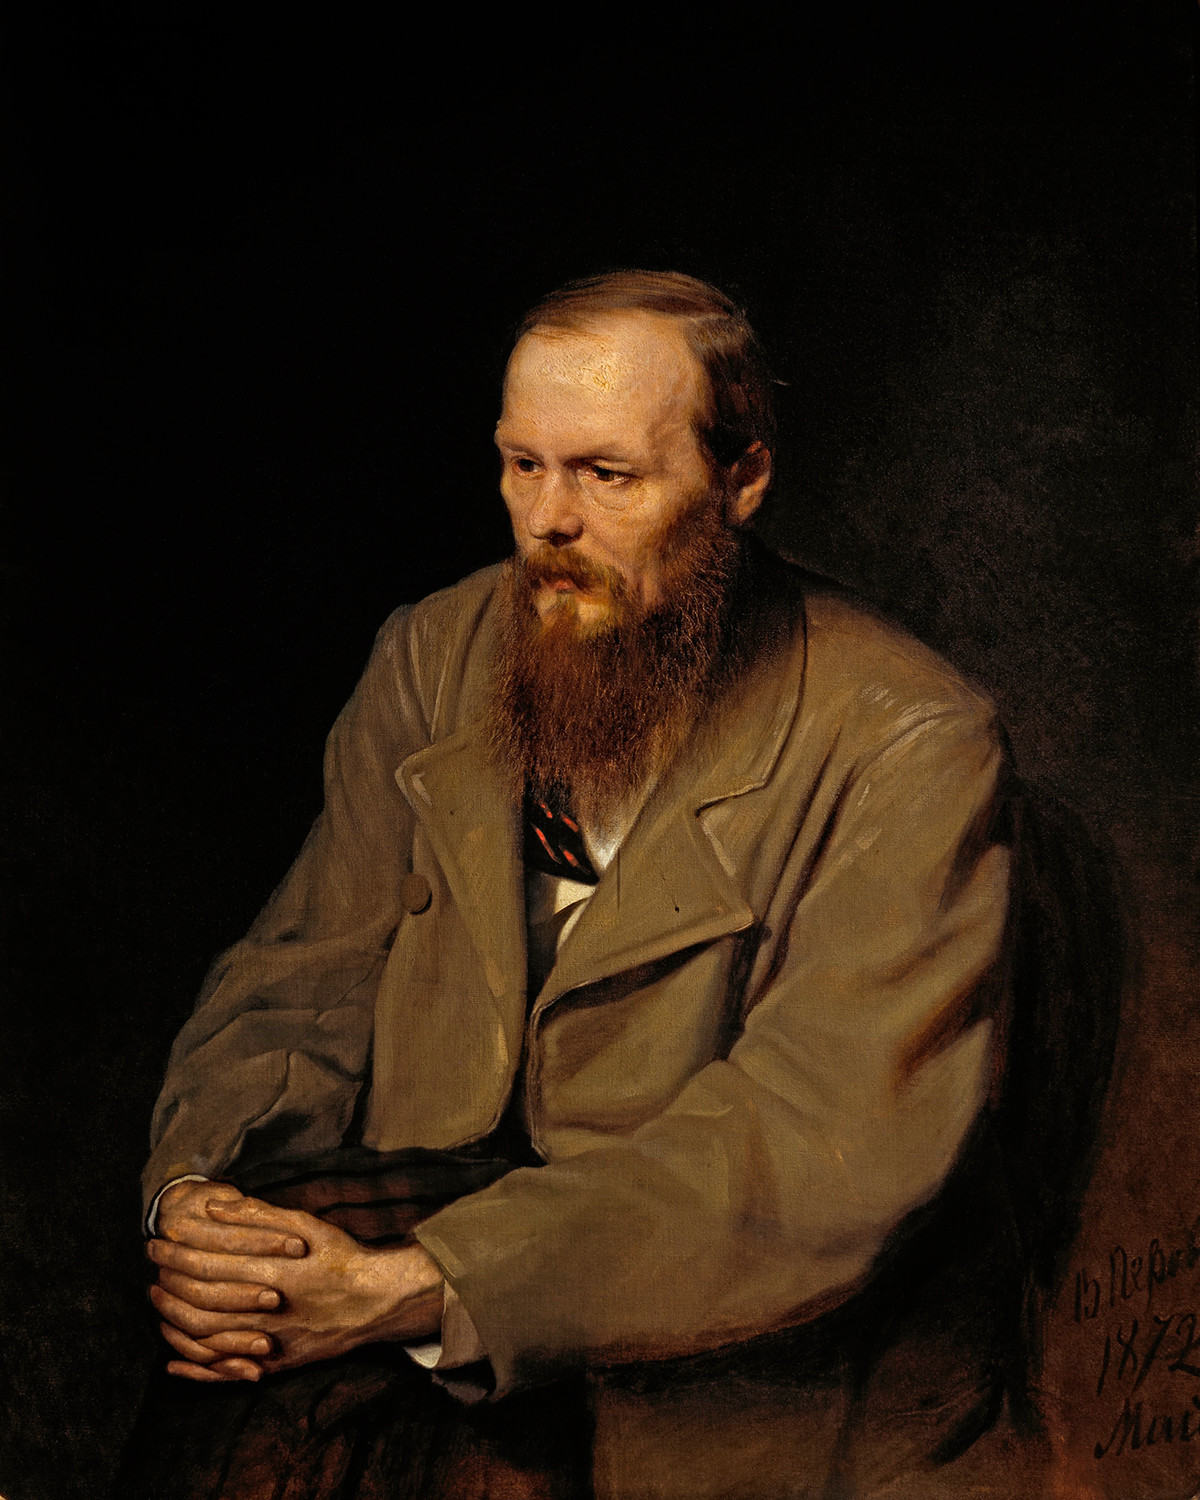 Vasilij Perov. Portret Dostojevskog, 1872. godina

